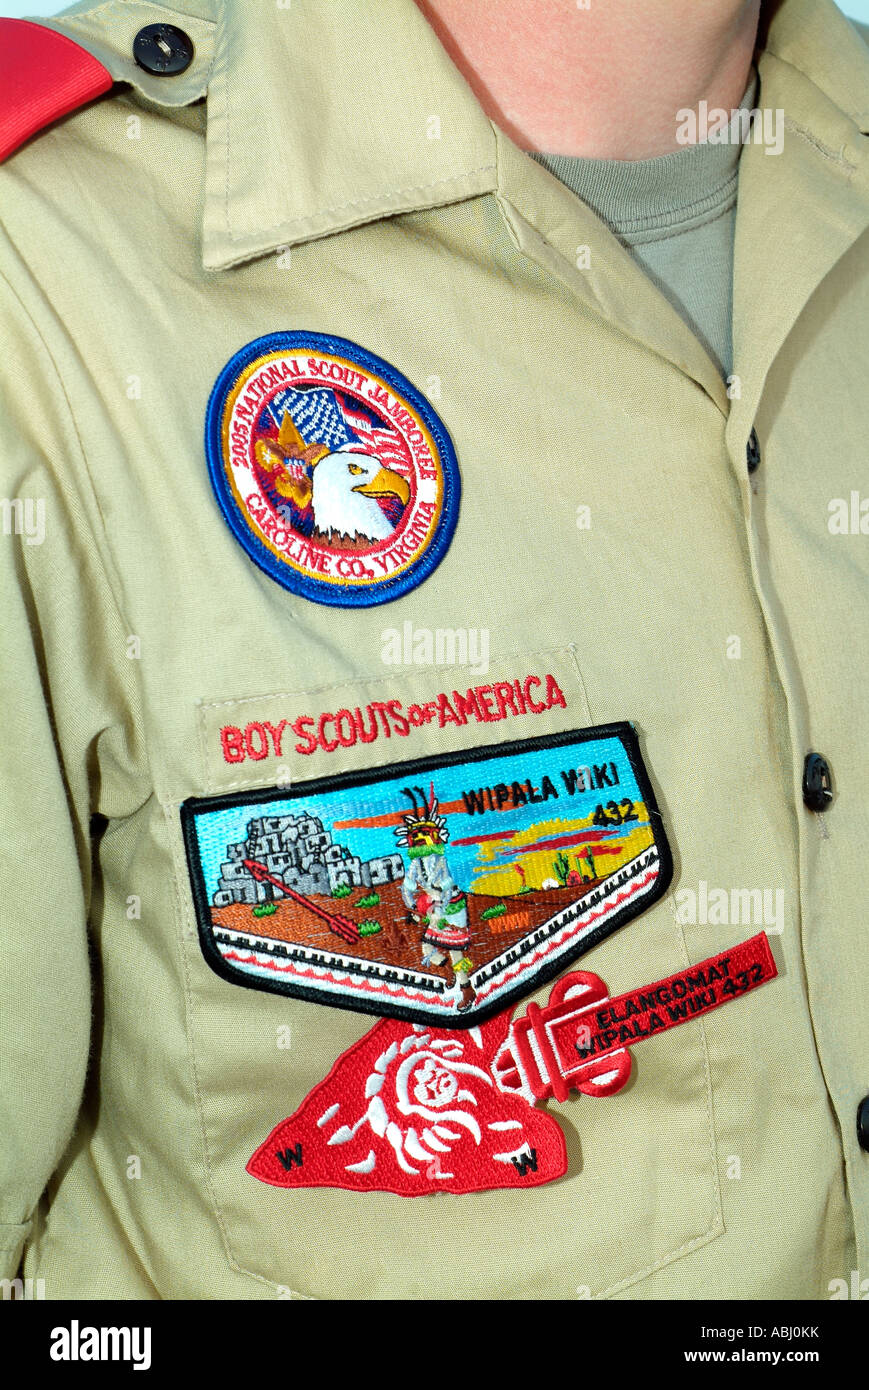 Star Scouts uniforms